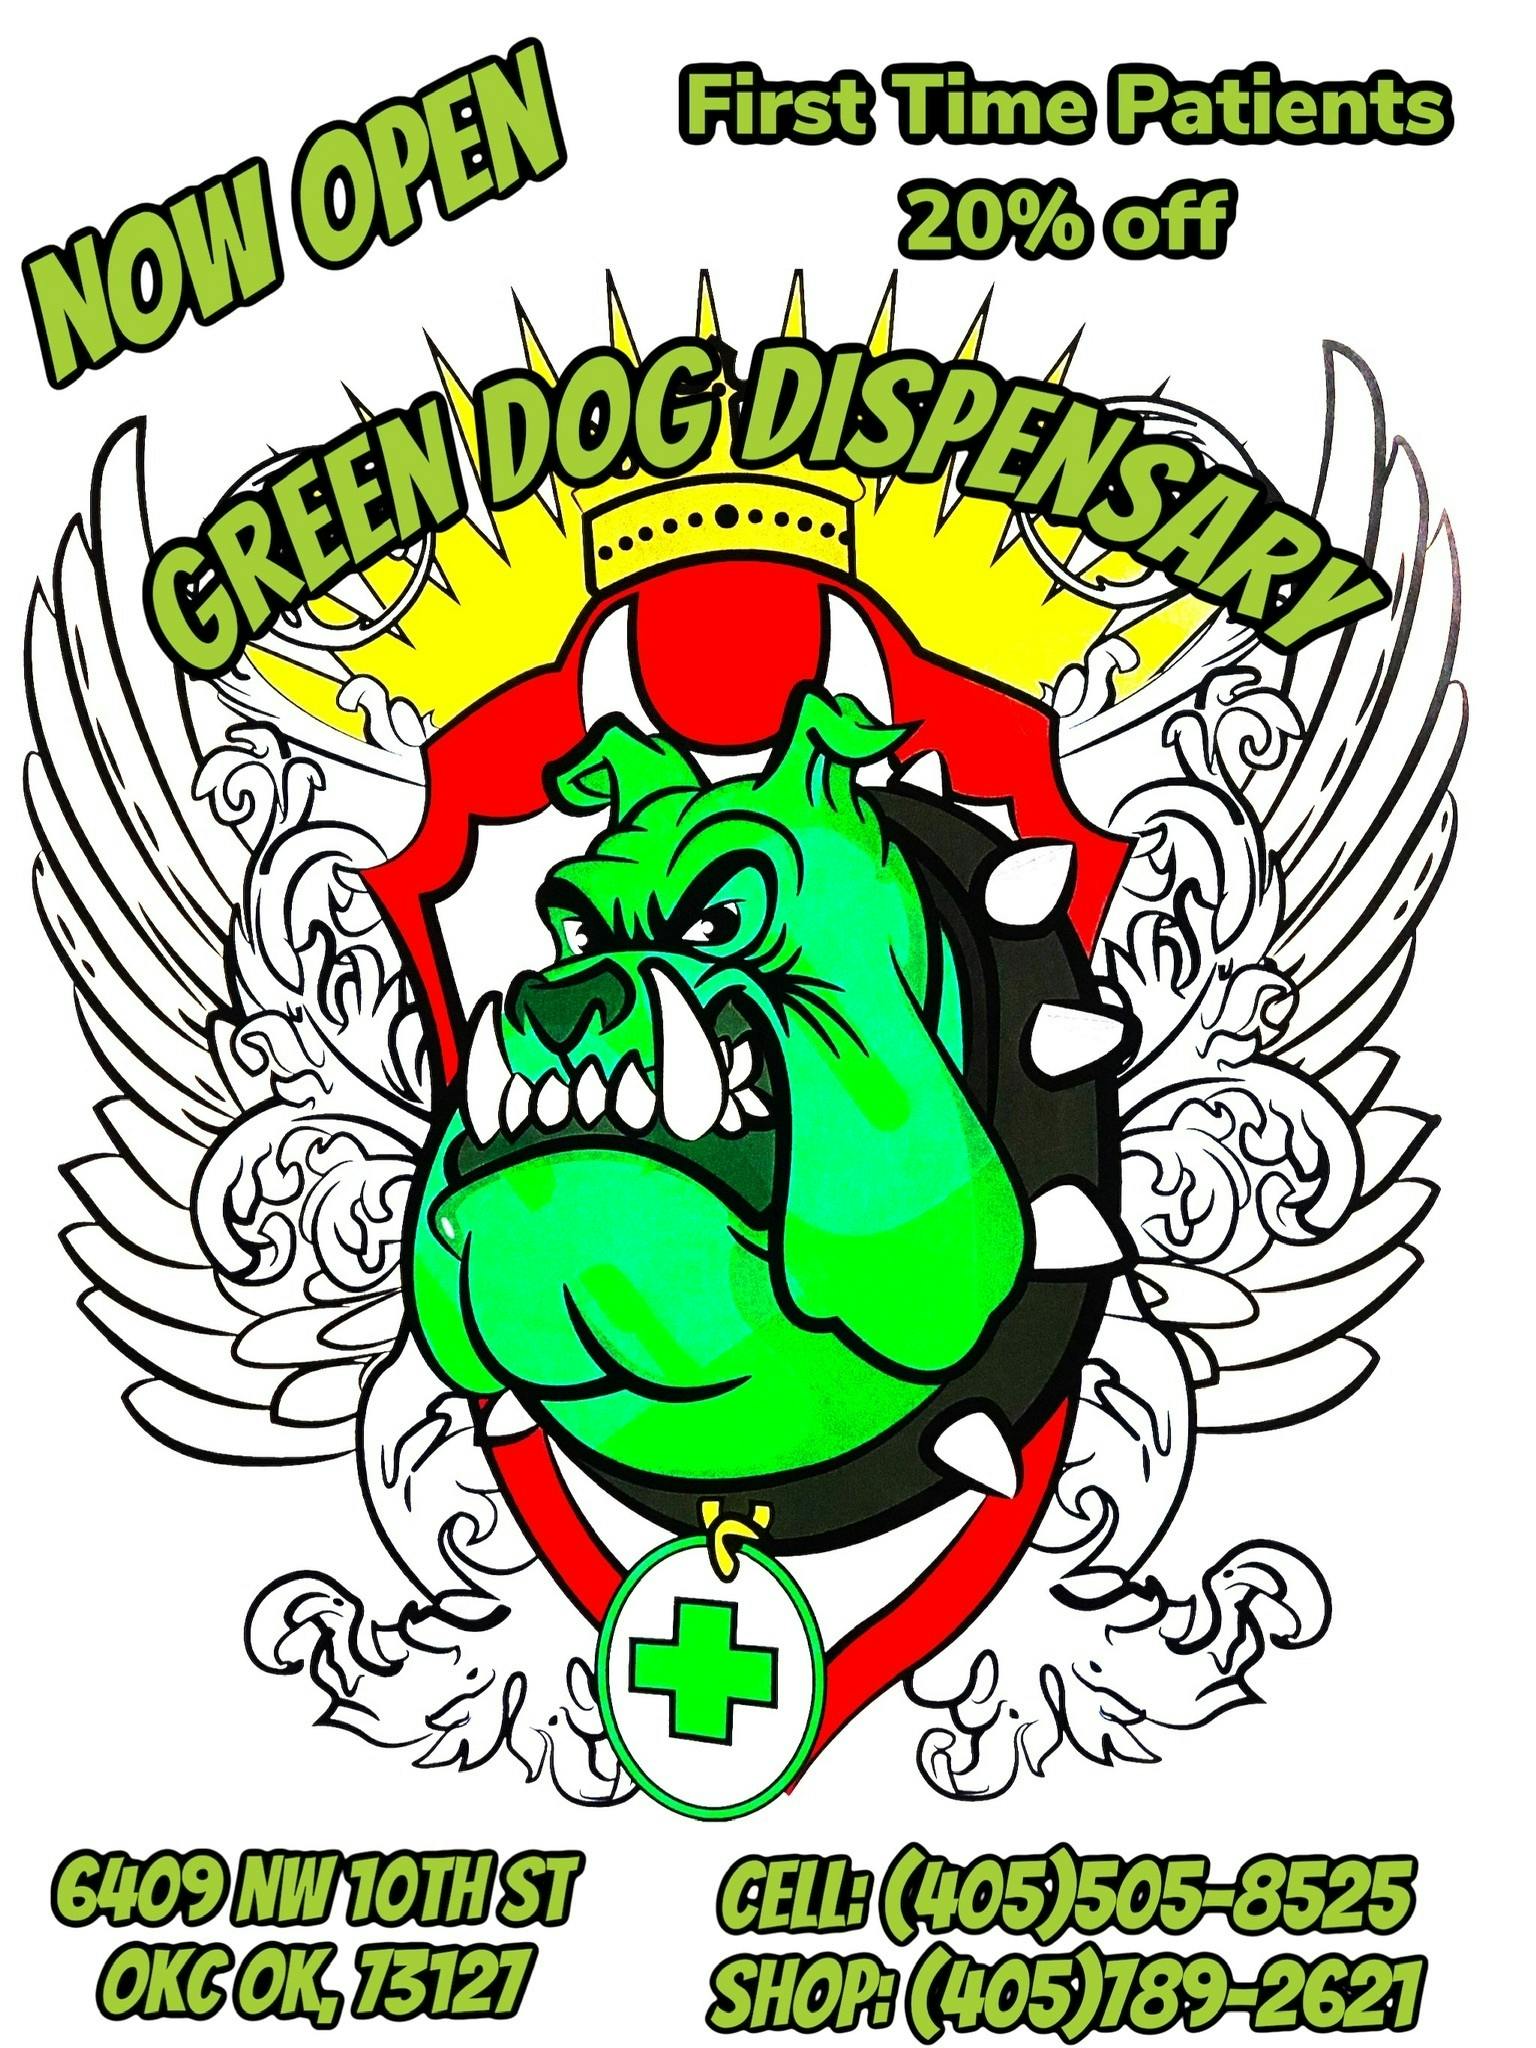 Green Dog Dispensary